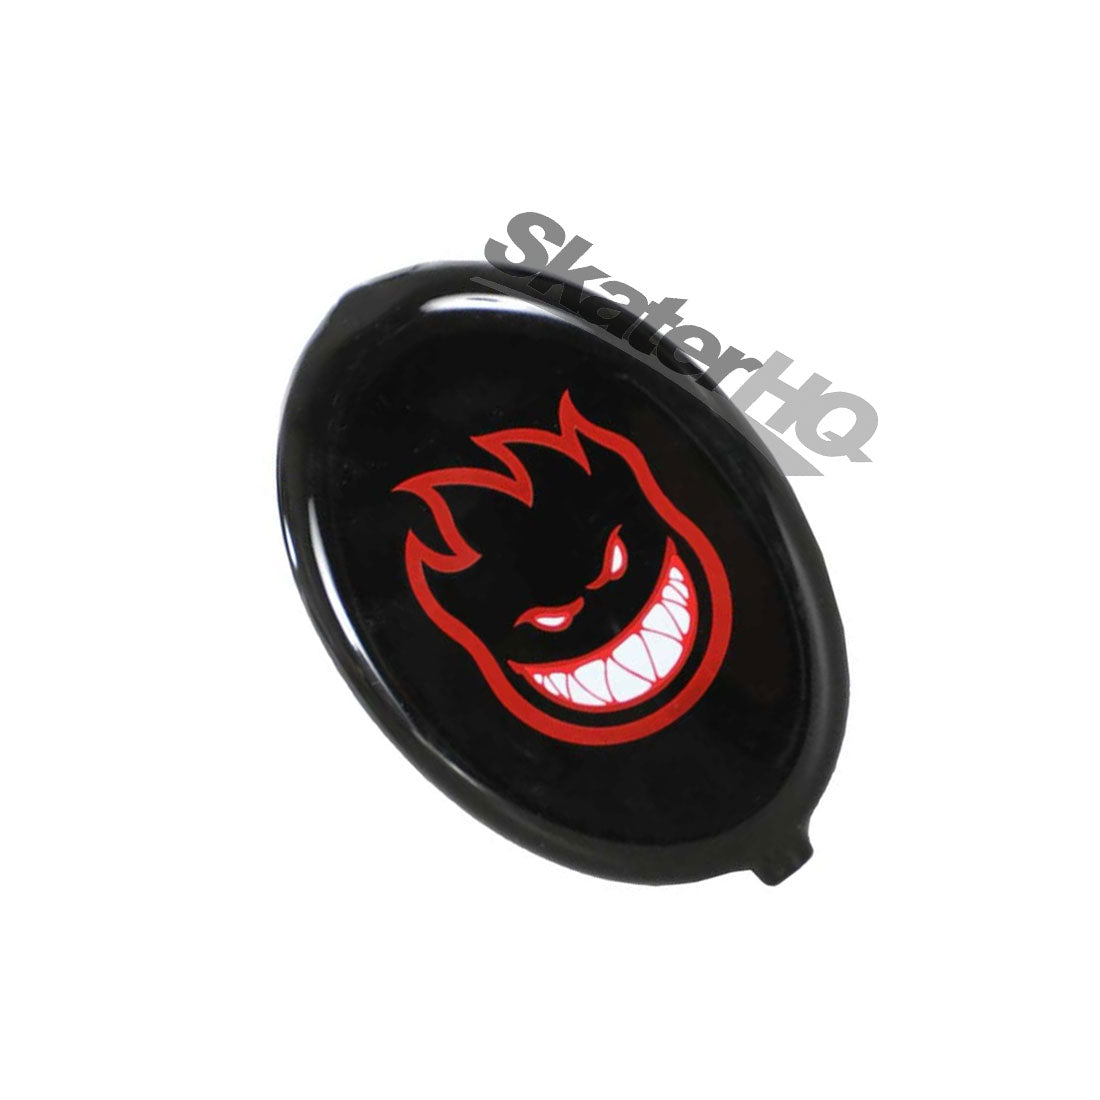 Spitfire Bighead Coin Pouch - Black/Red Skateboard Accessories